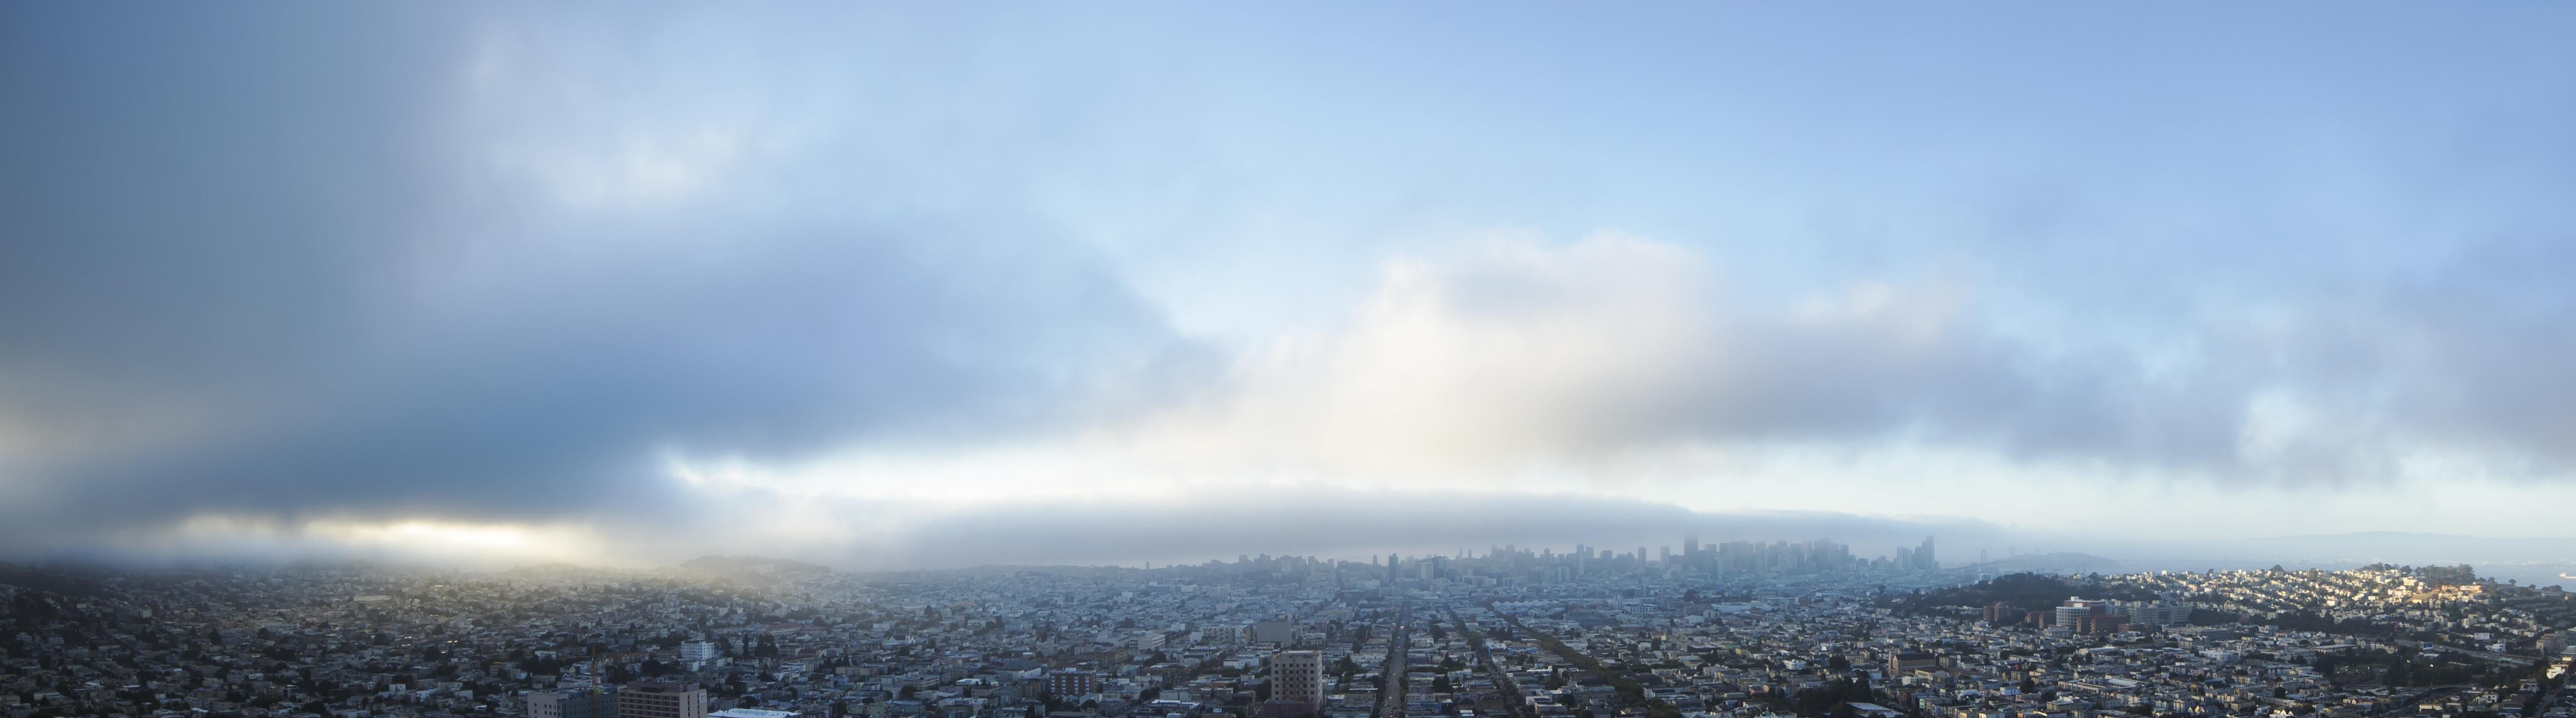 Bernal Hill, San Francisco, Mist, Brouillard Wallpaper